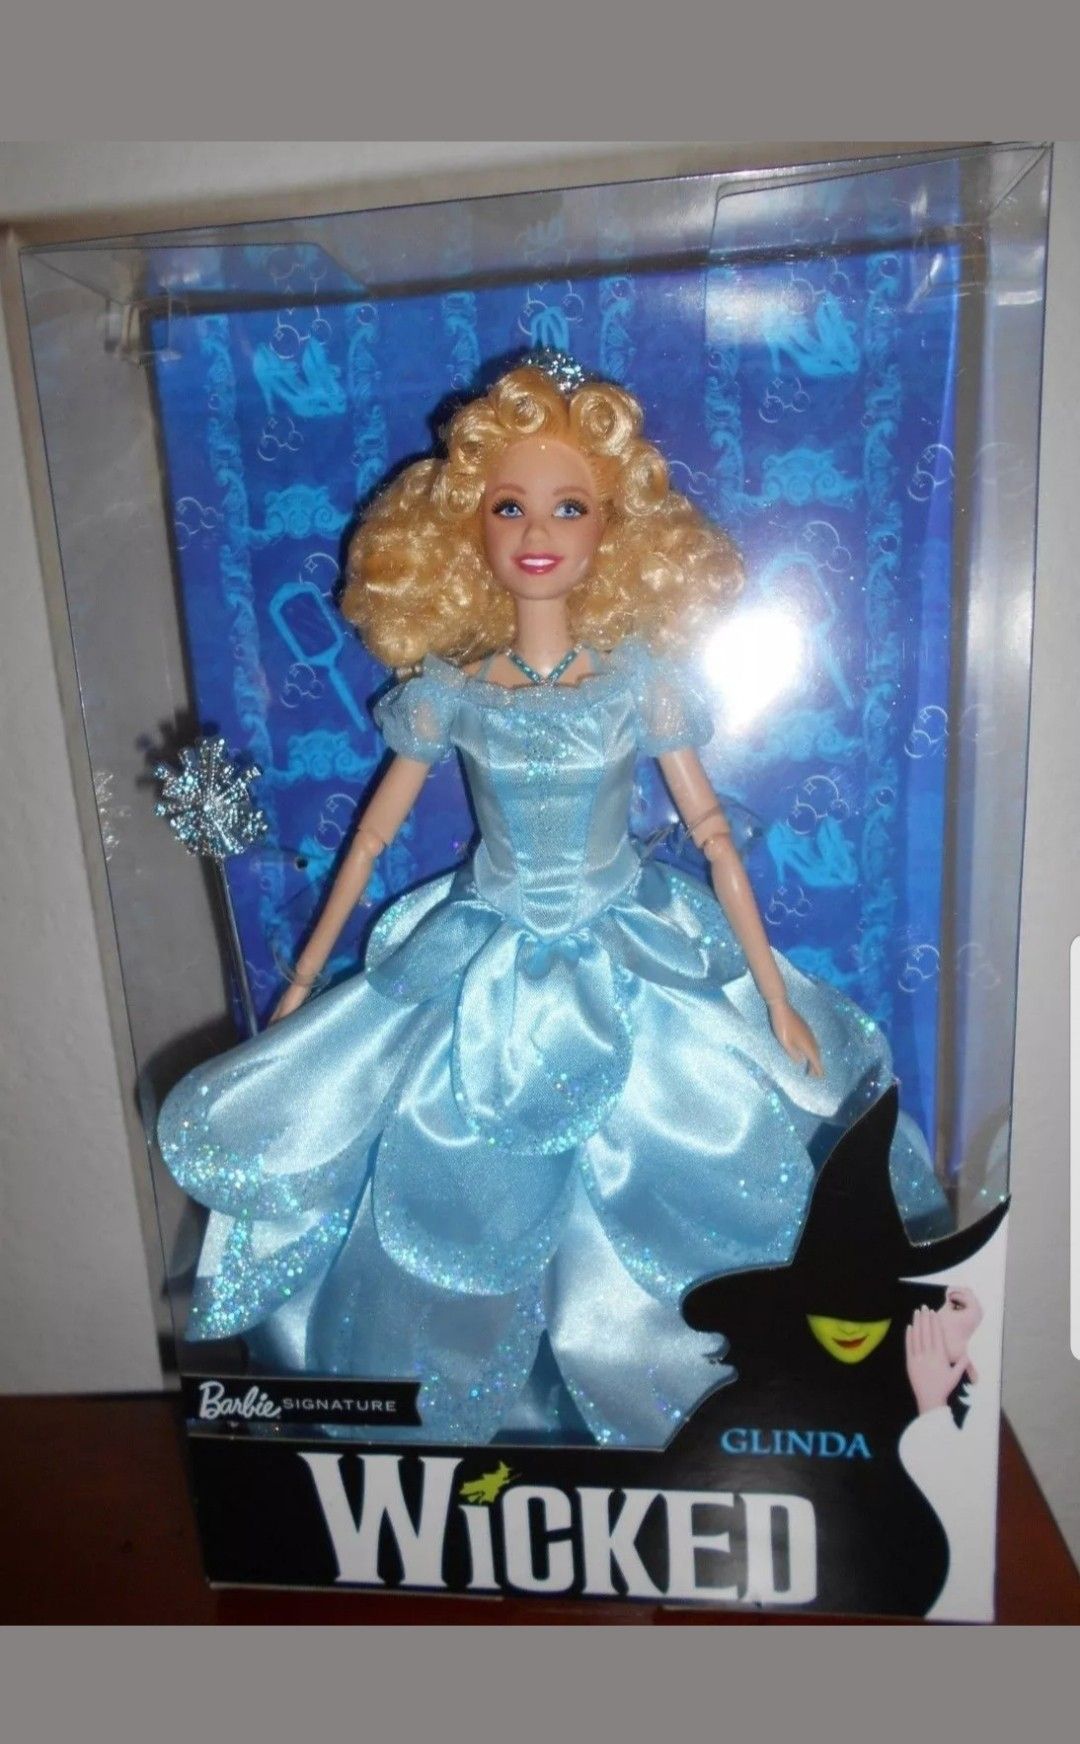 Wicked the musical glinda Barbie doll